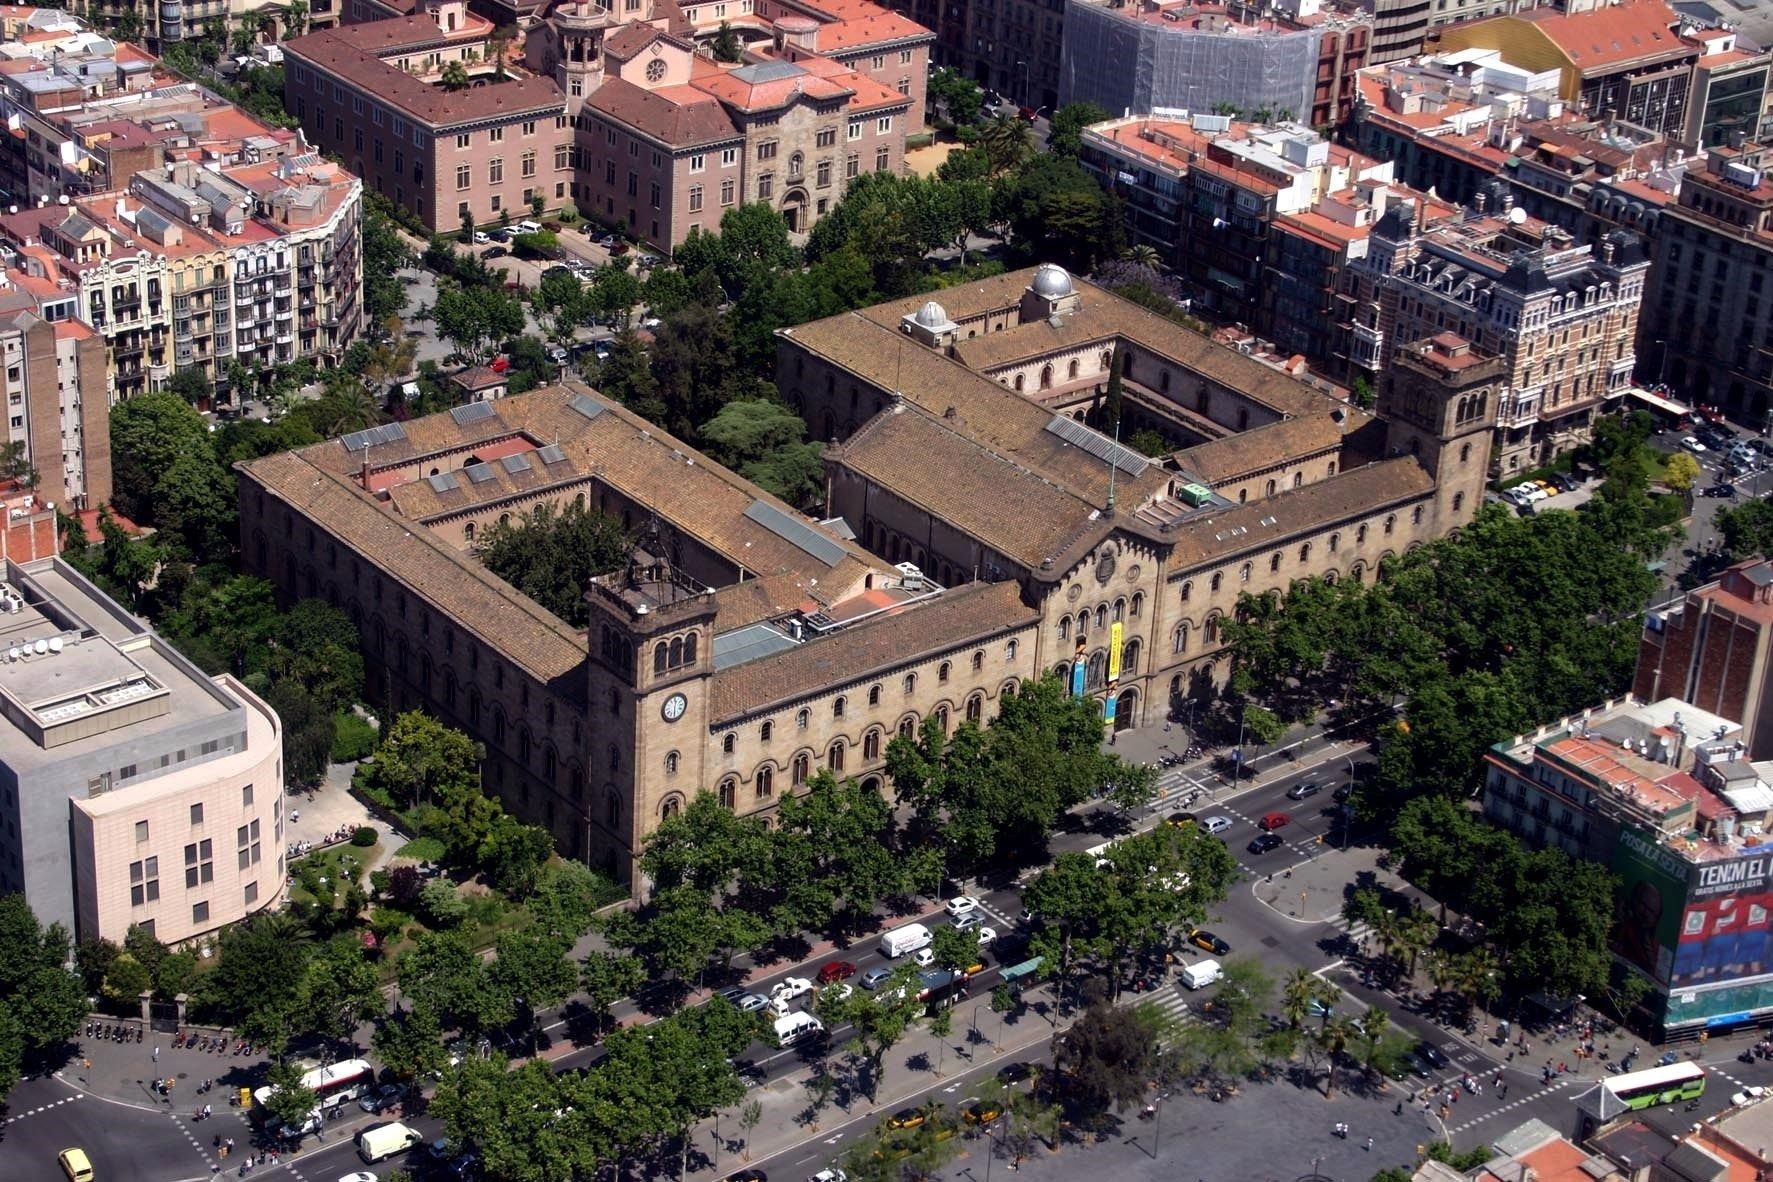 Spain university. Университет Барселоны Universitat de Barcelona:. Университет Барселоны (UB). UAB – автономный университет Барселоны. UAB институт Барселона.